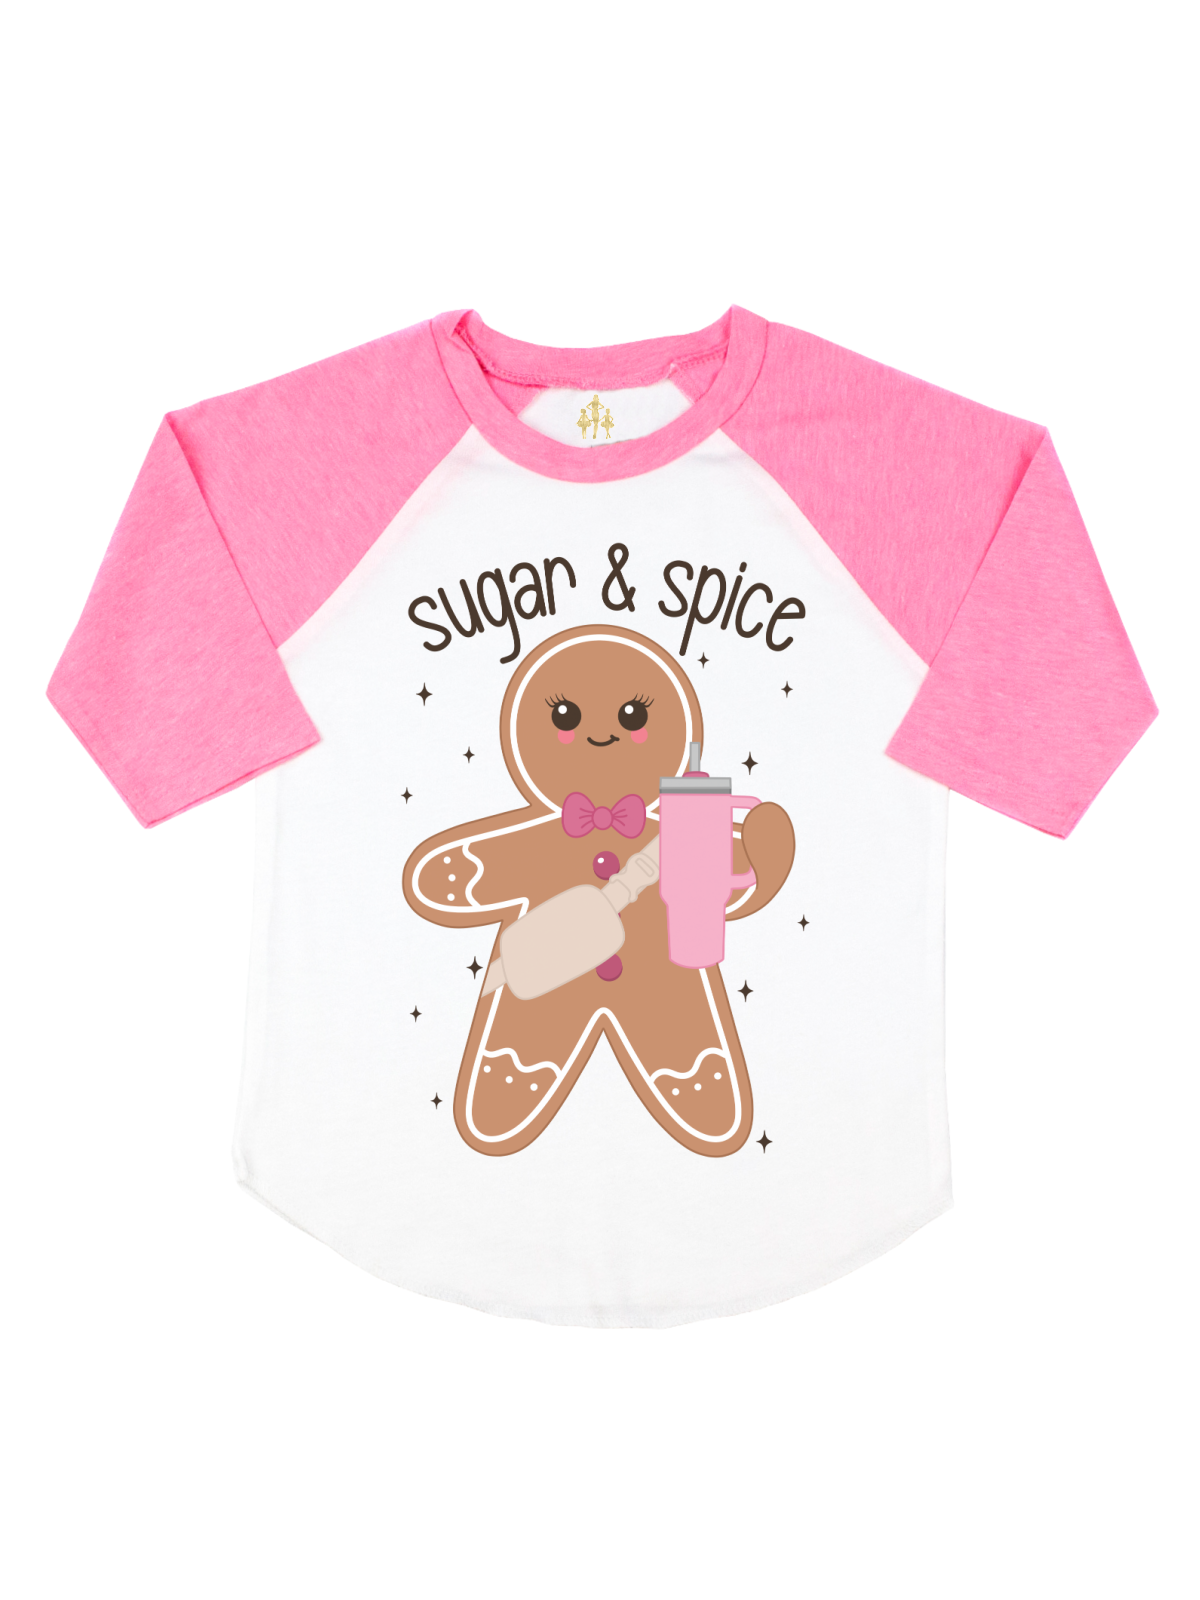 Sugar and Spice Kids Gingerbread Man Christmas Shirt